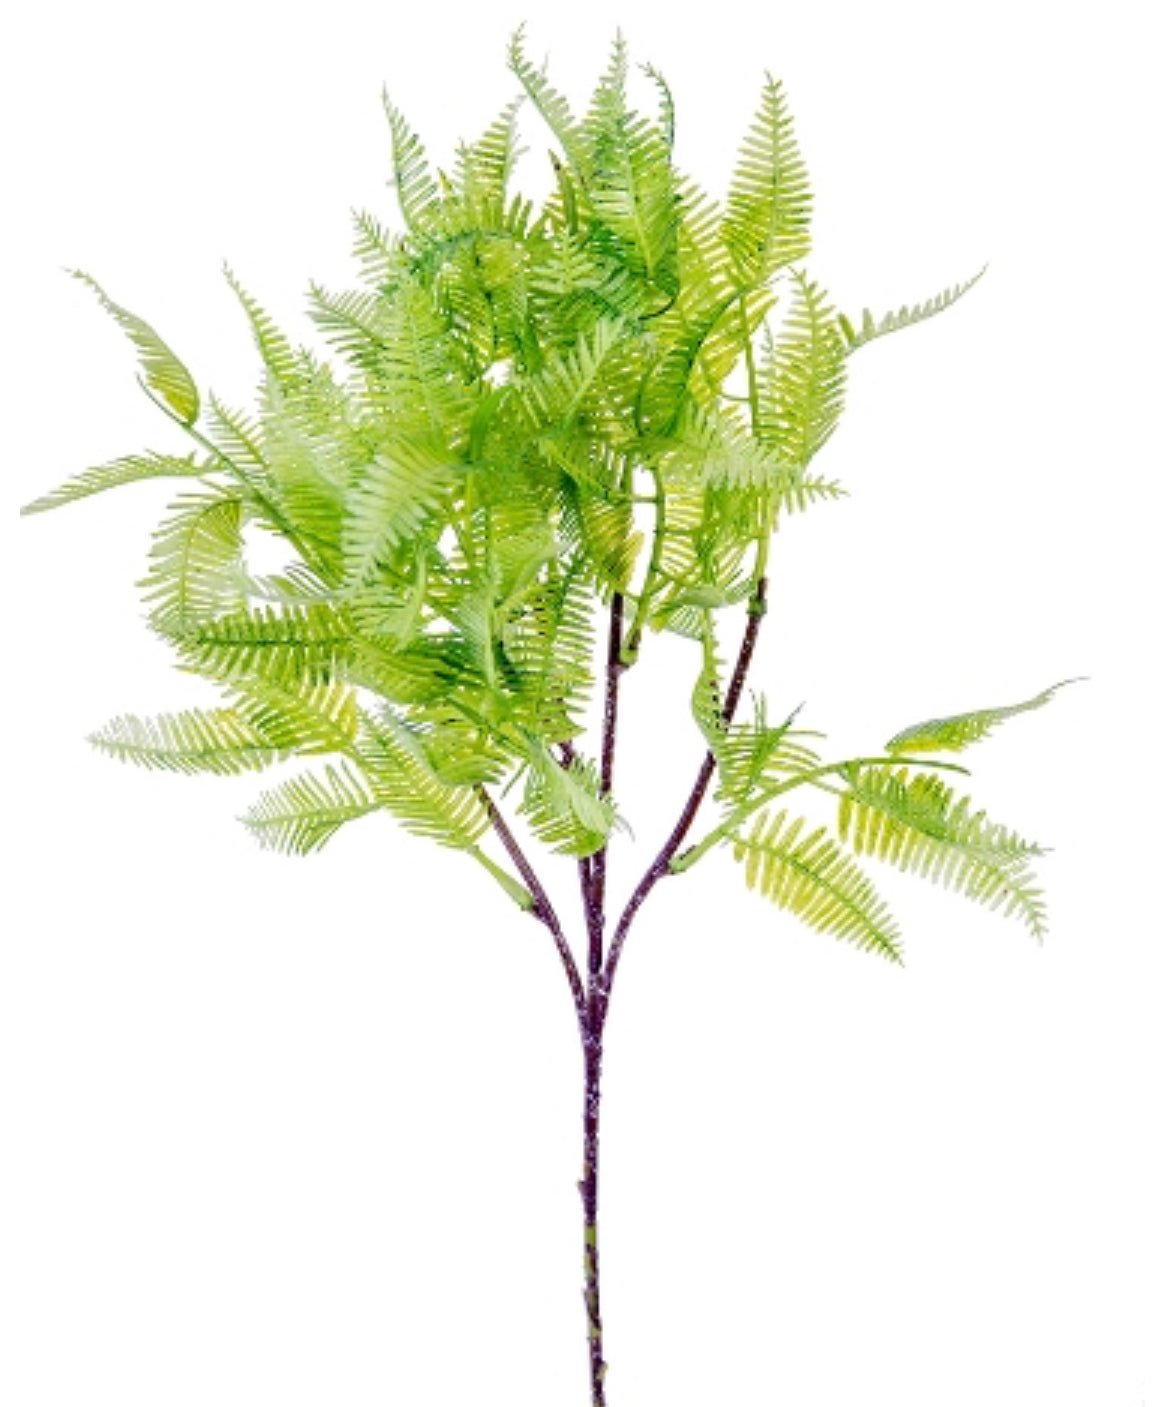 Artificial Boston fern bright greenery spray - Greenery Market2310402GR